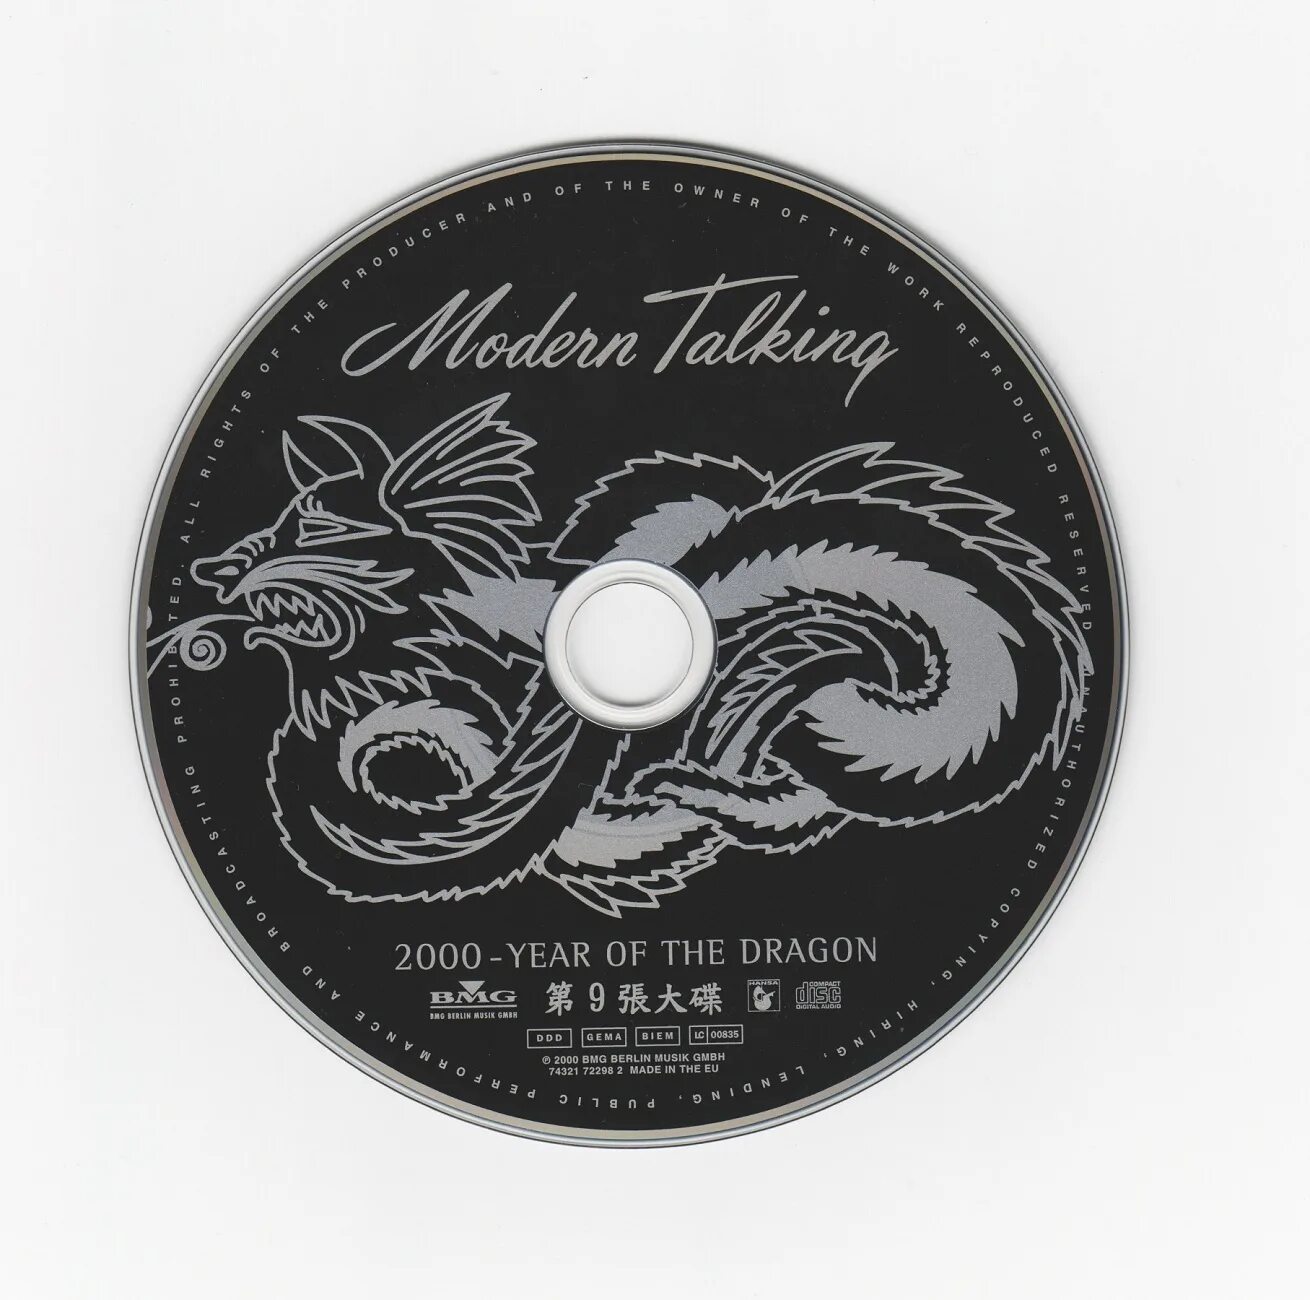 Final album. Modern talking year of the Dragon 2000. Modern talking 6 album. Modern talking year of the Dragon обложка. Modern talking 2000 year of the Dragon аудиокассета.